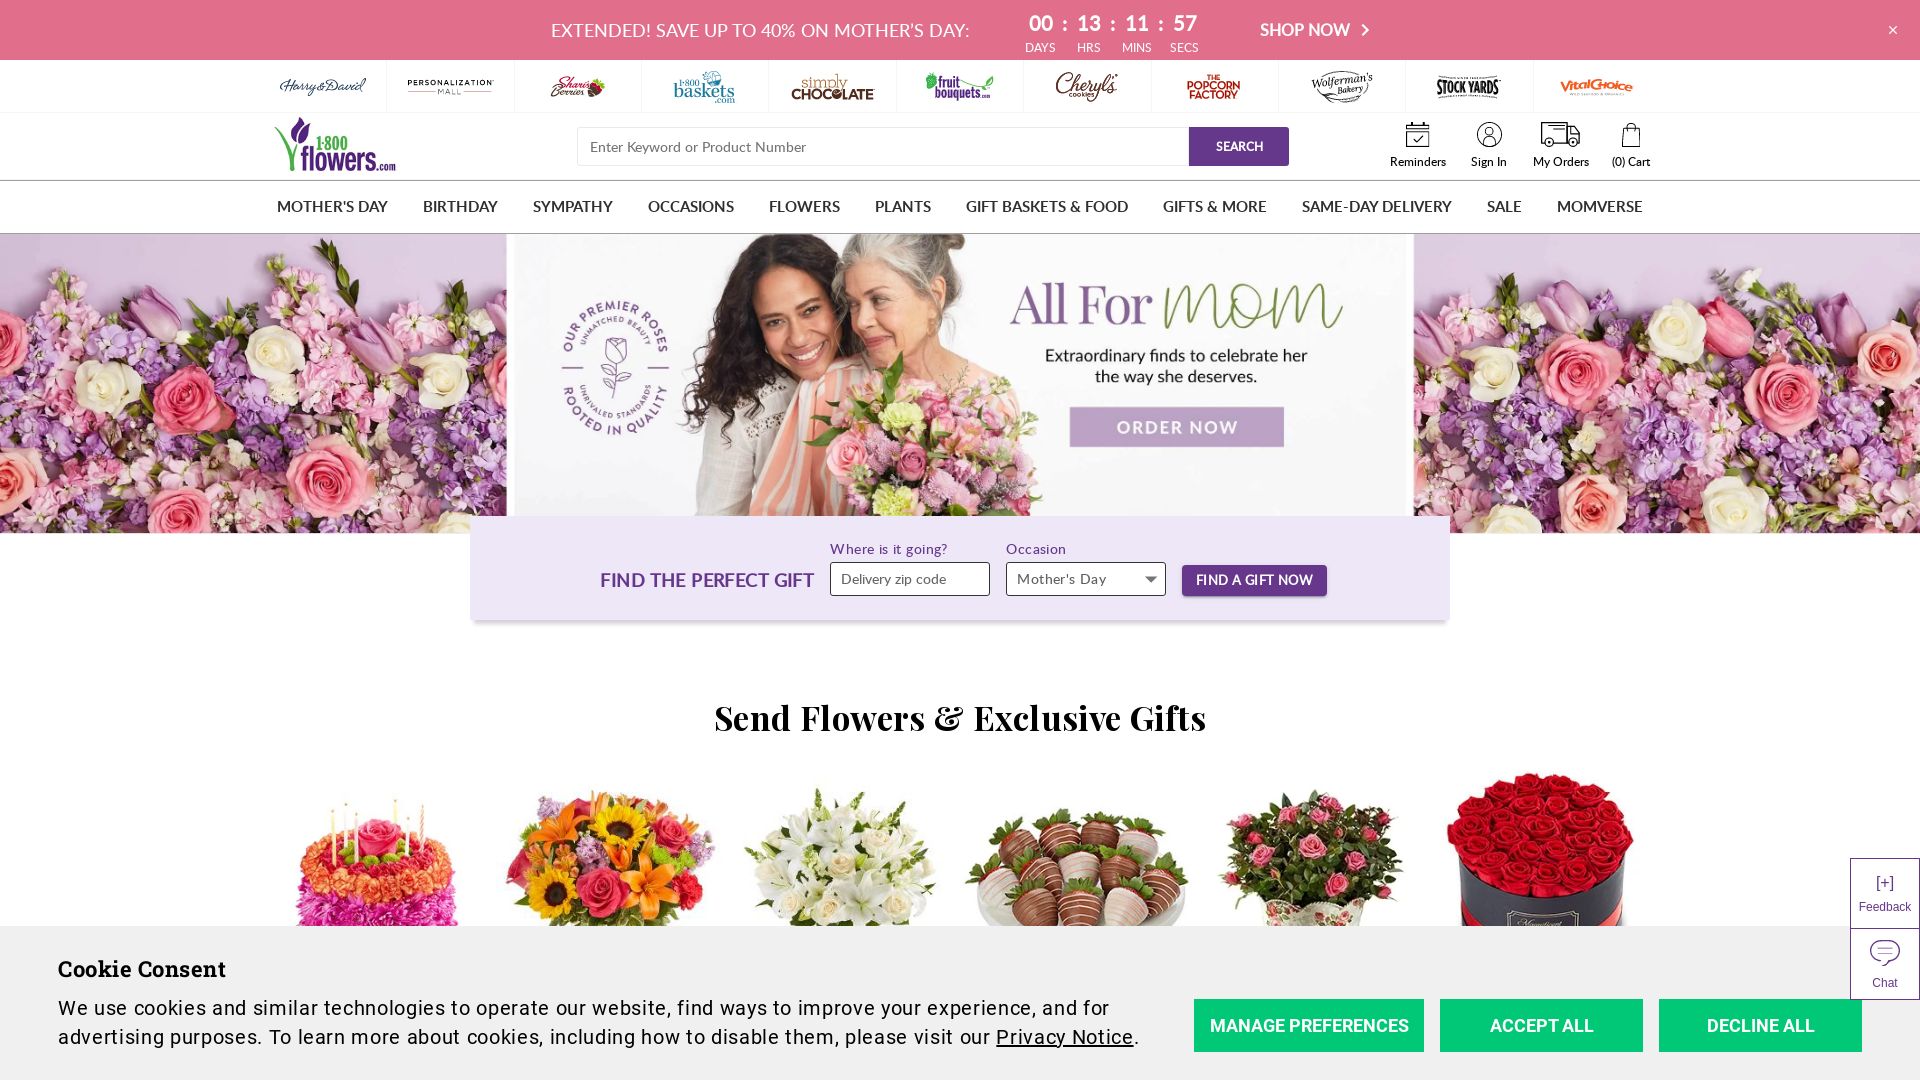 Website status 1800flowers.com is   ONLINE